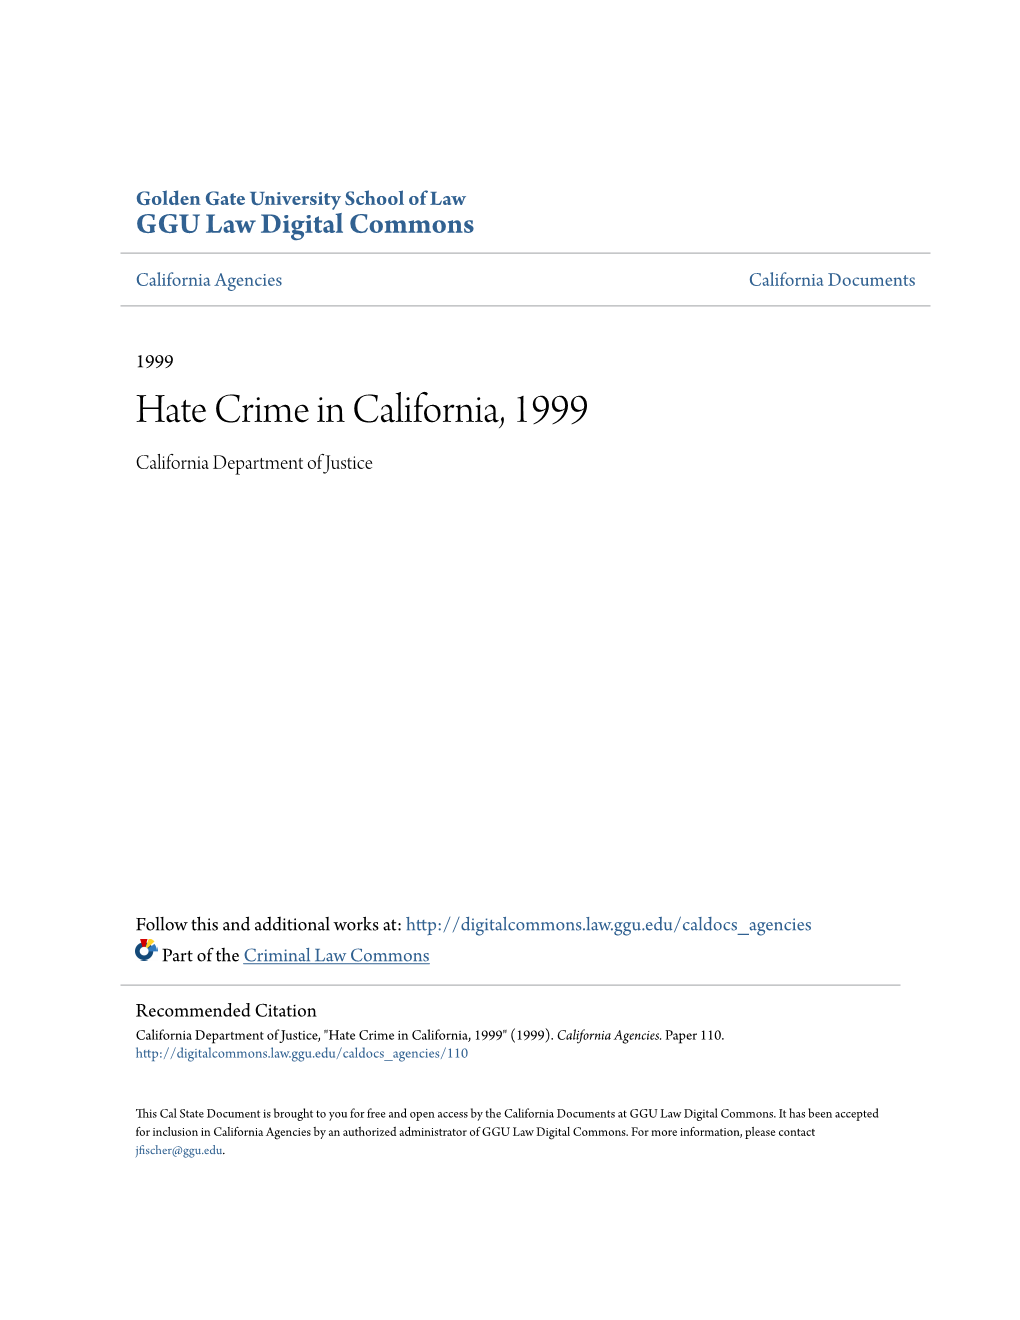 Hate Crime in California, 1999 California Department of Justice